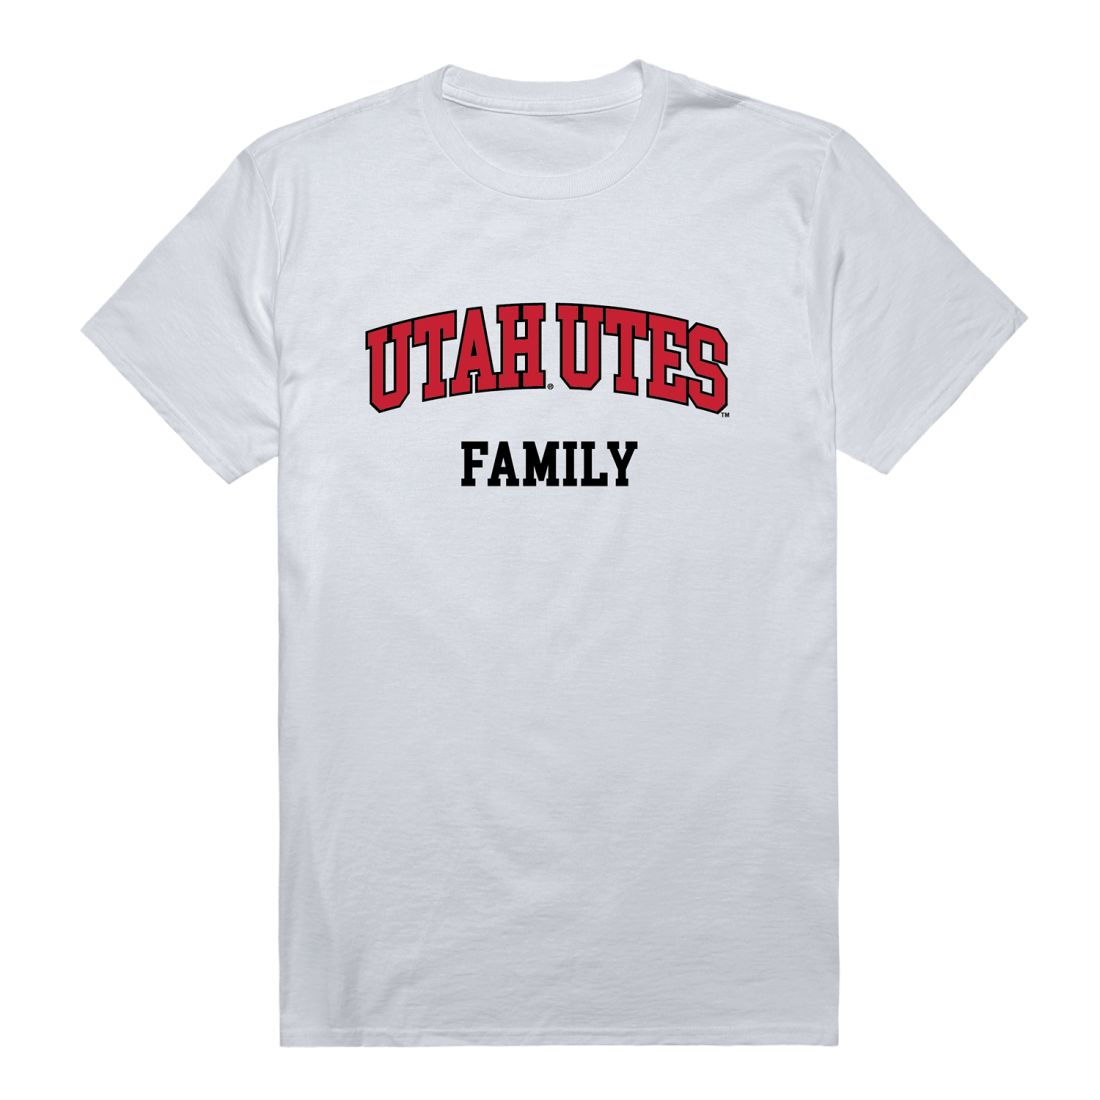 University of Utah Utes Family T-Shirt